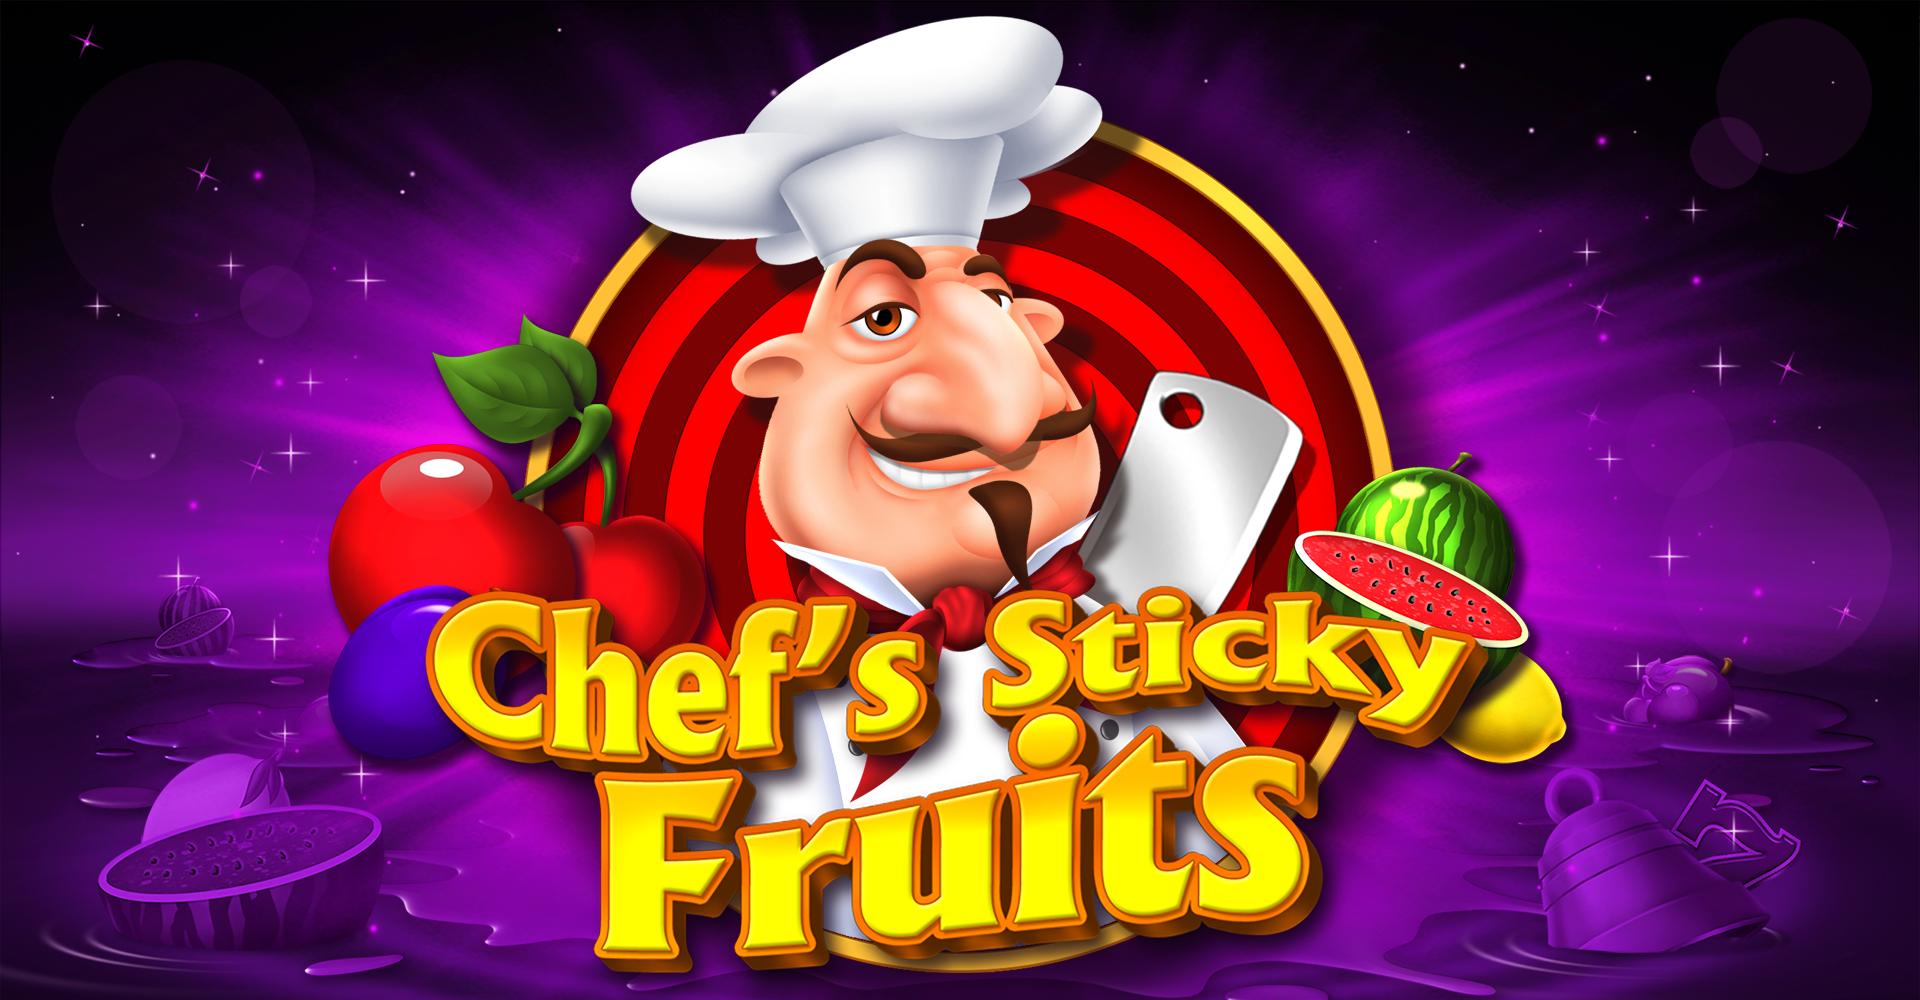 Chef's Sticky Fruits | Промо-материалы | Игровой автомат онлайн